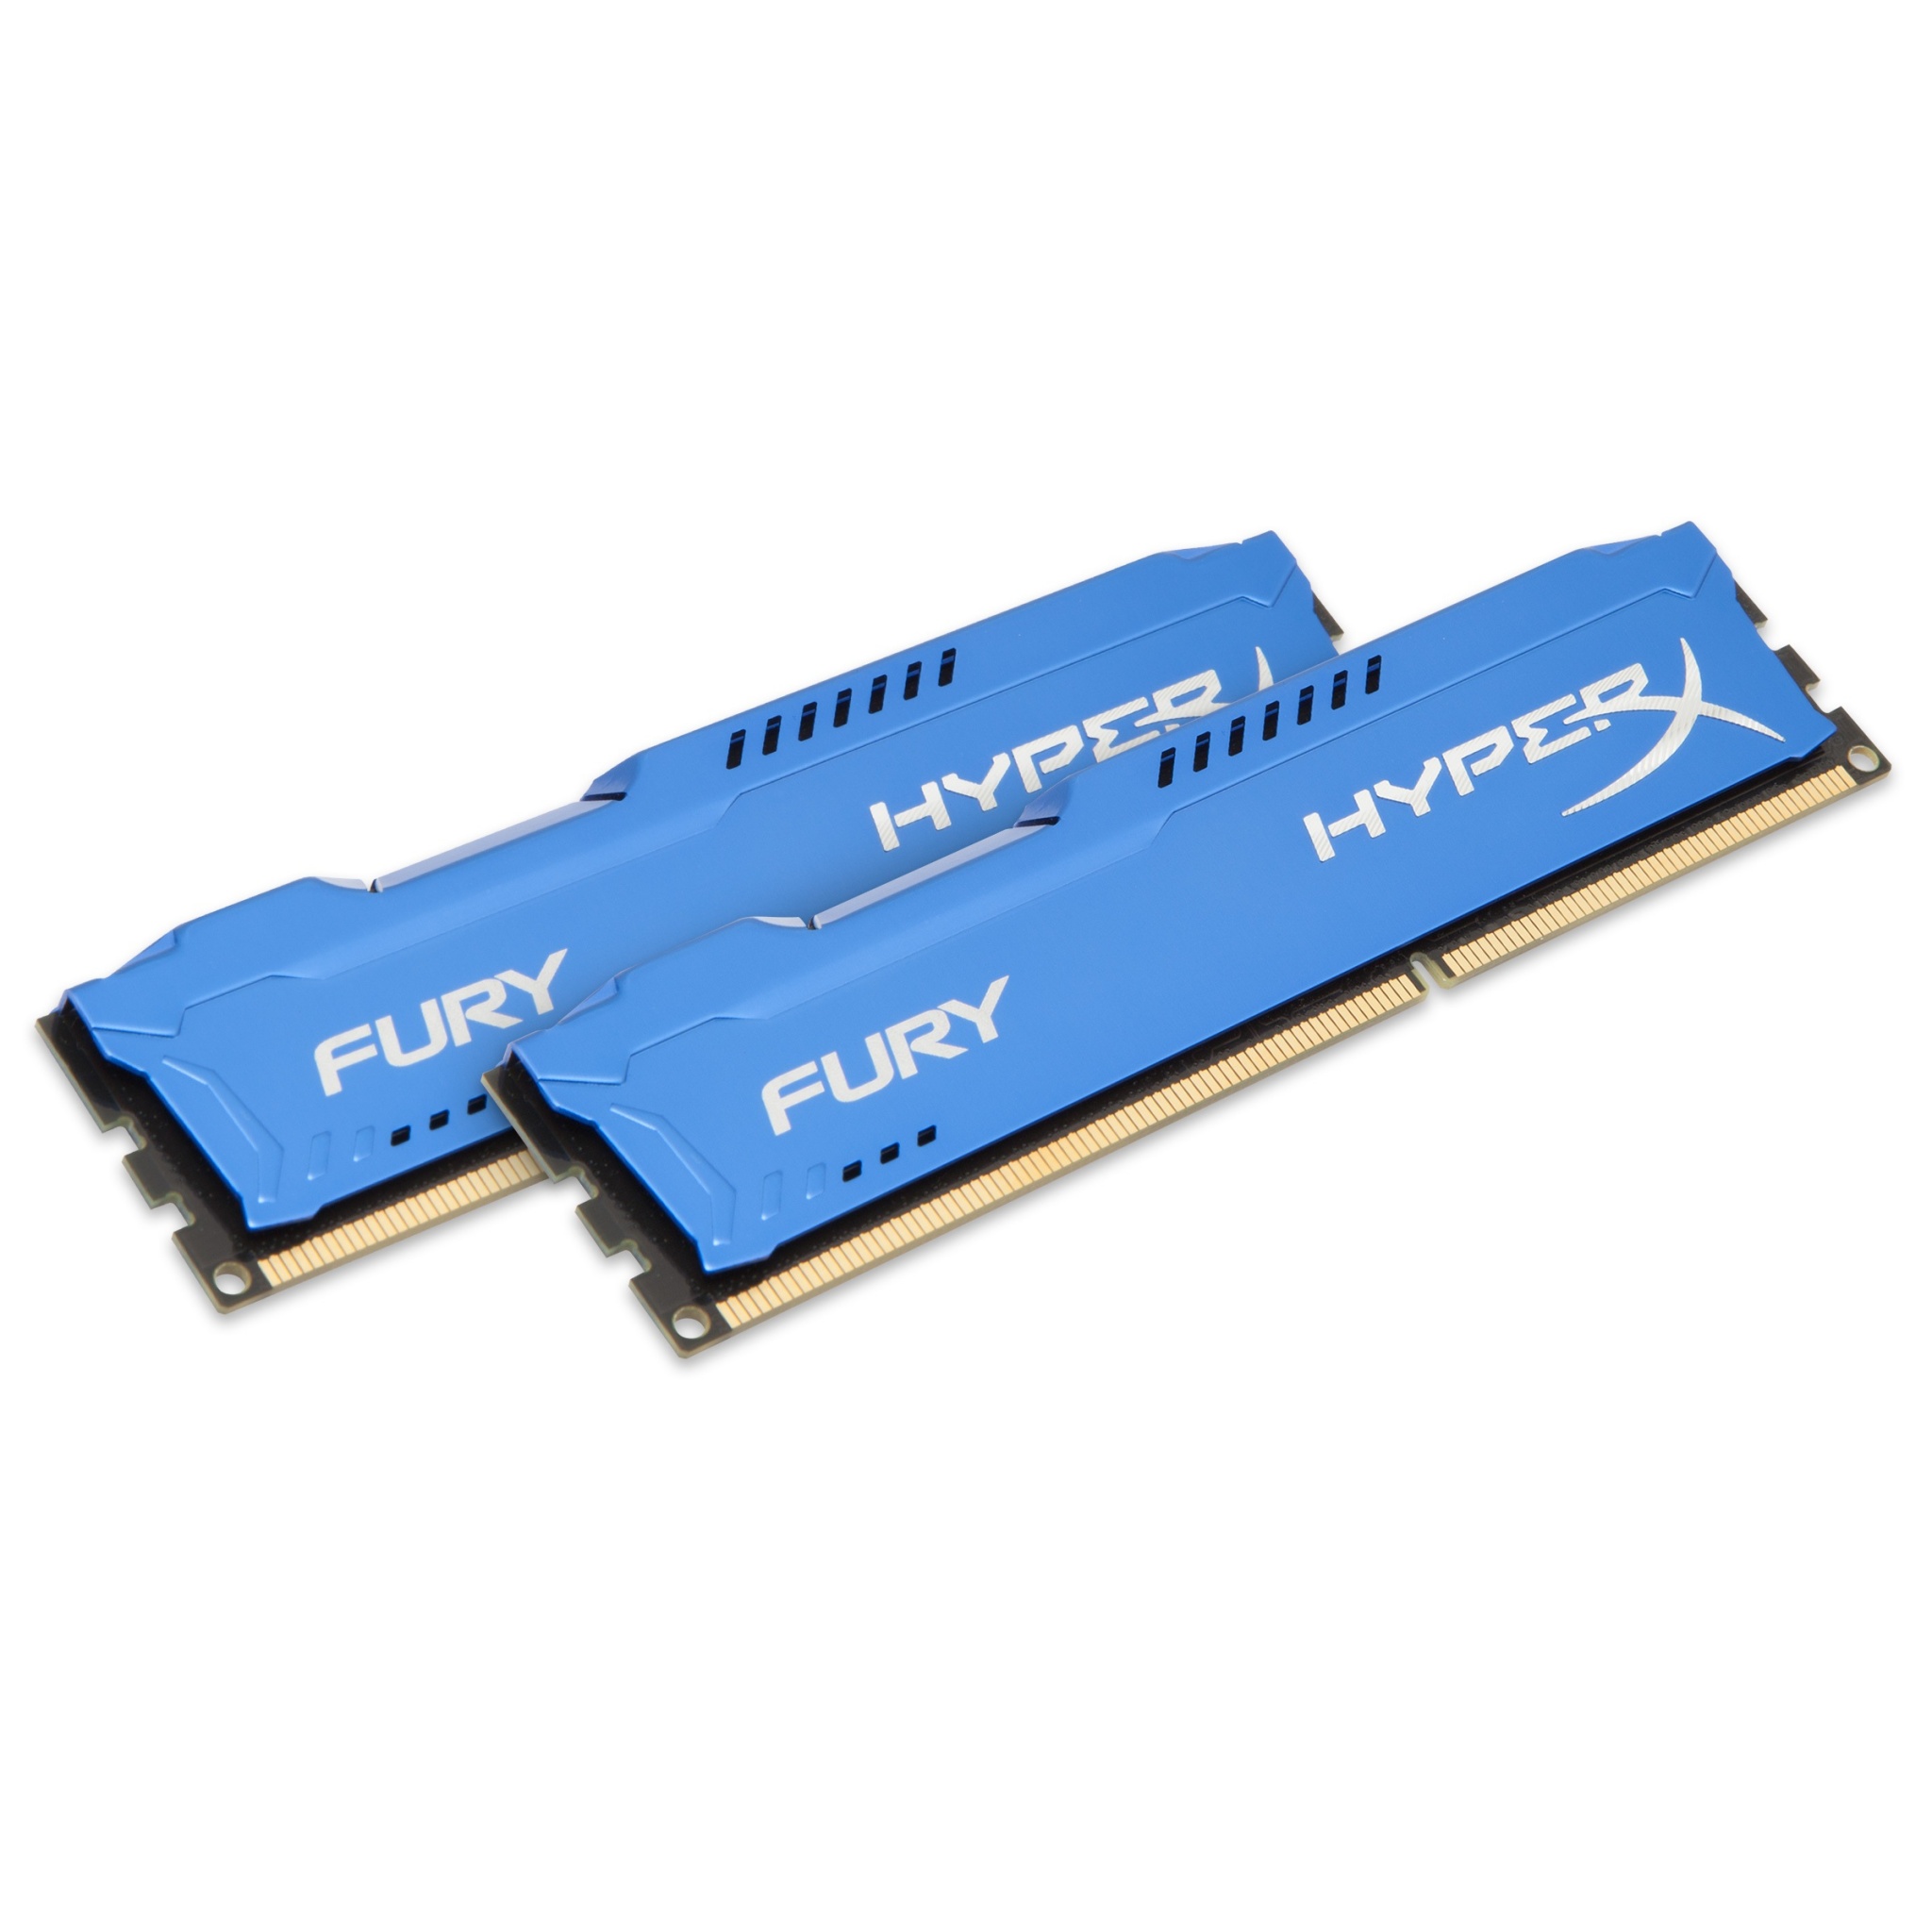 Meget sur Sandsynligvis Ring tilbage 16GB Kingston HyperX Fury DDR3 PC3-14900 1866MHZ CL10 Dual Memory Kit  (2x8GB) Blue